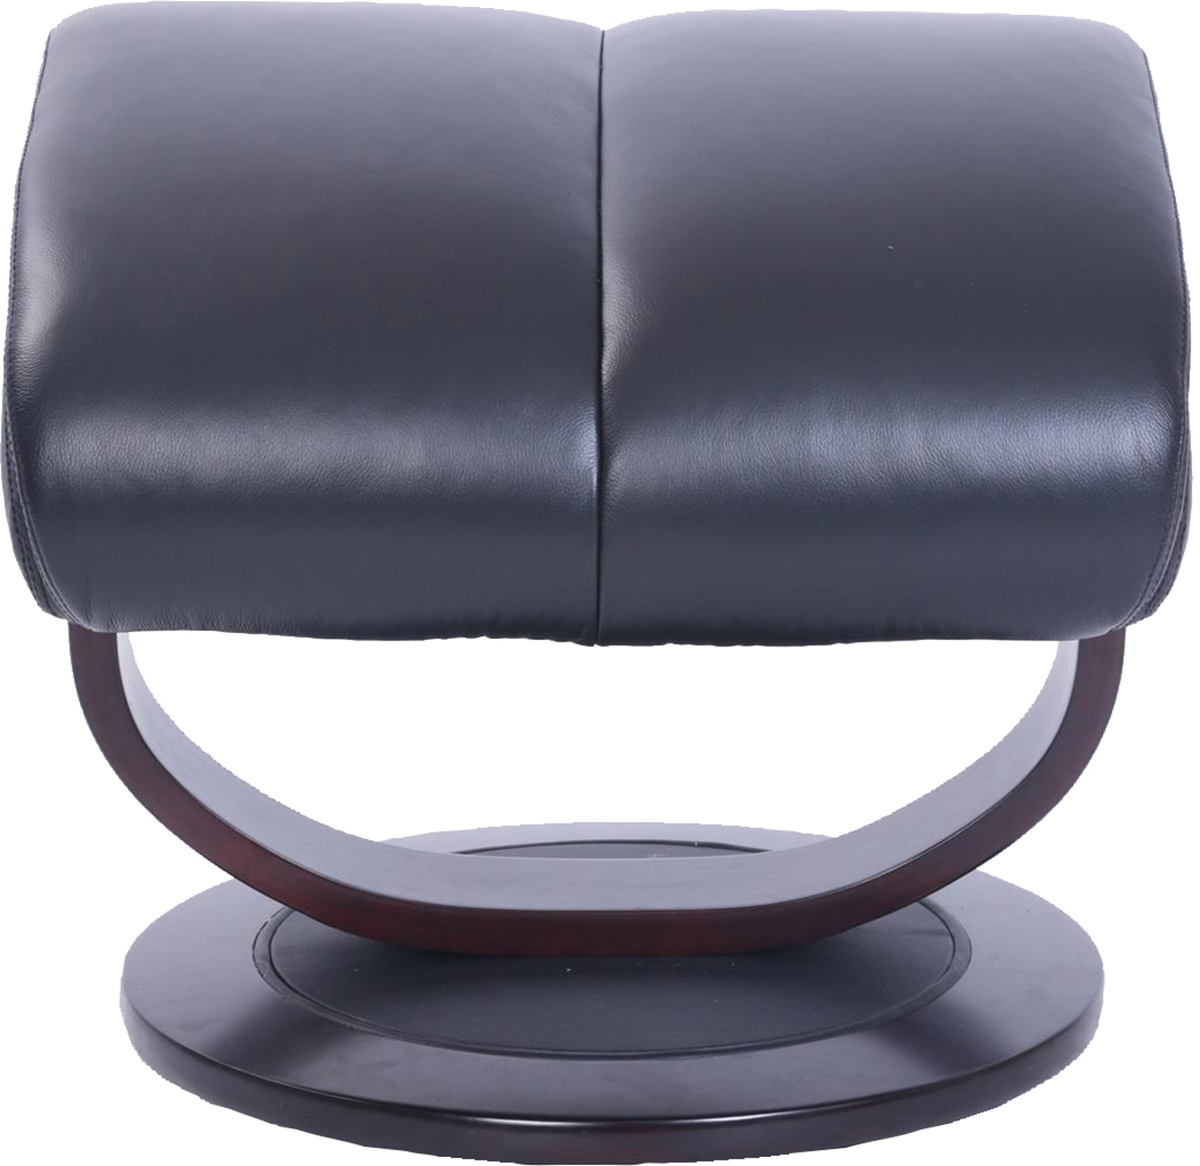 Barcalounger Brynn Pedestal Recliner Chair and Ottoman - Hilton Black/Leather Match